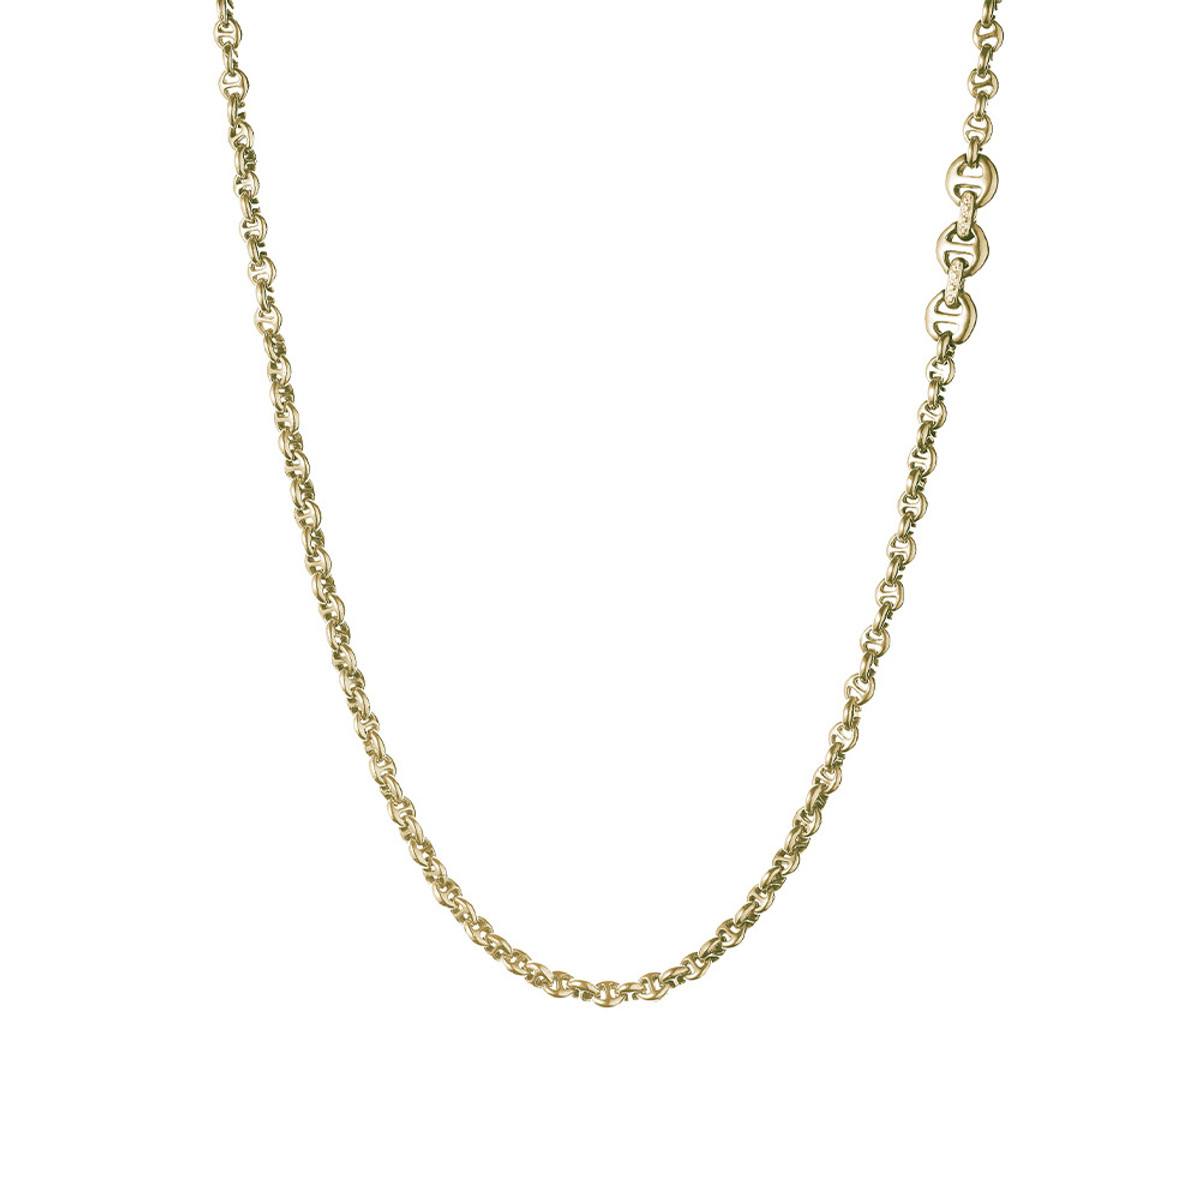 Hoorsenbuhs 18K Yellow Gold 5MM Open-Link Diamond Toggle Necklace-57480 Product Image